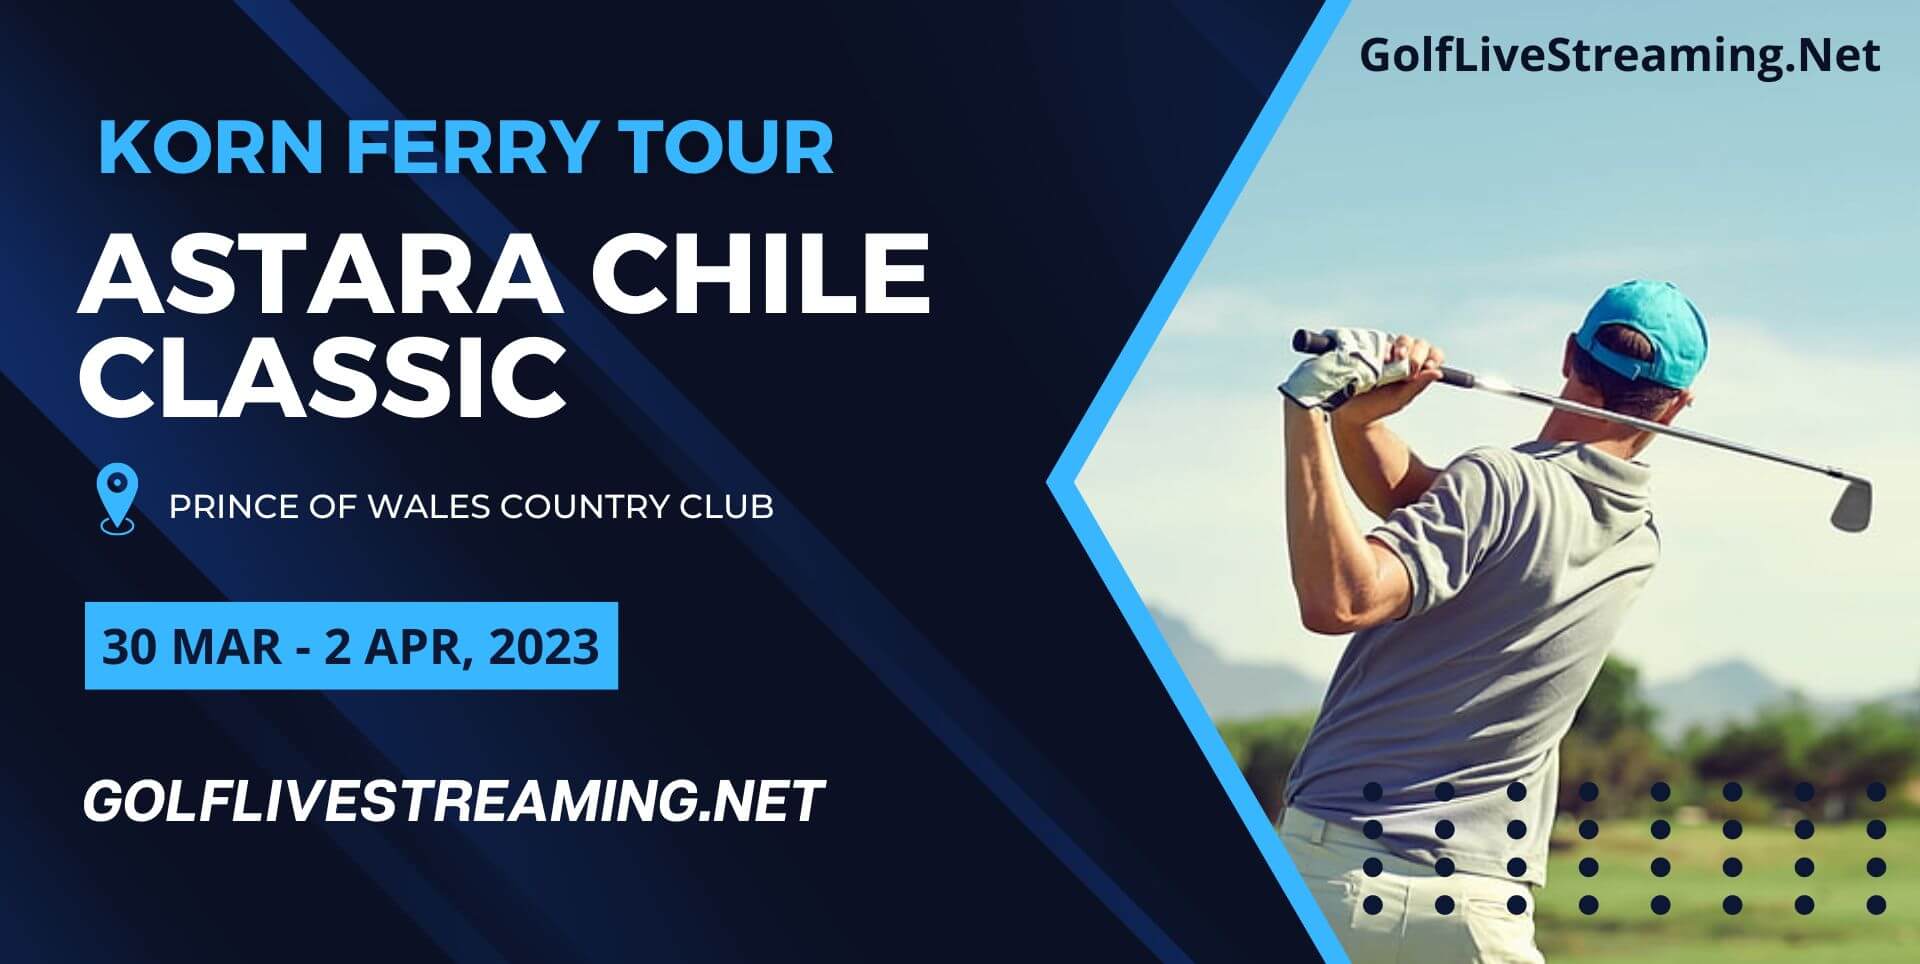 Astara Chile Classic Round 3 Live Stream 2023 | Korn Ferry Tour